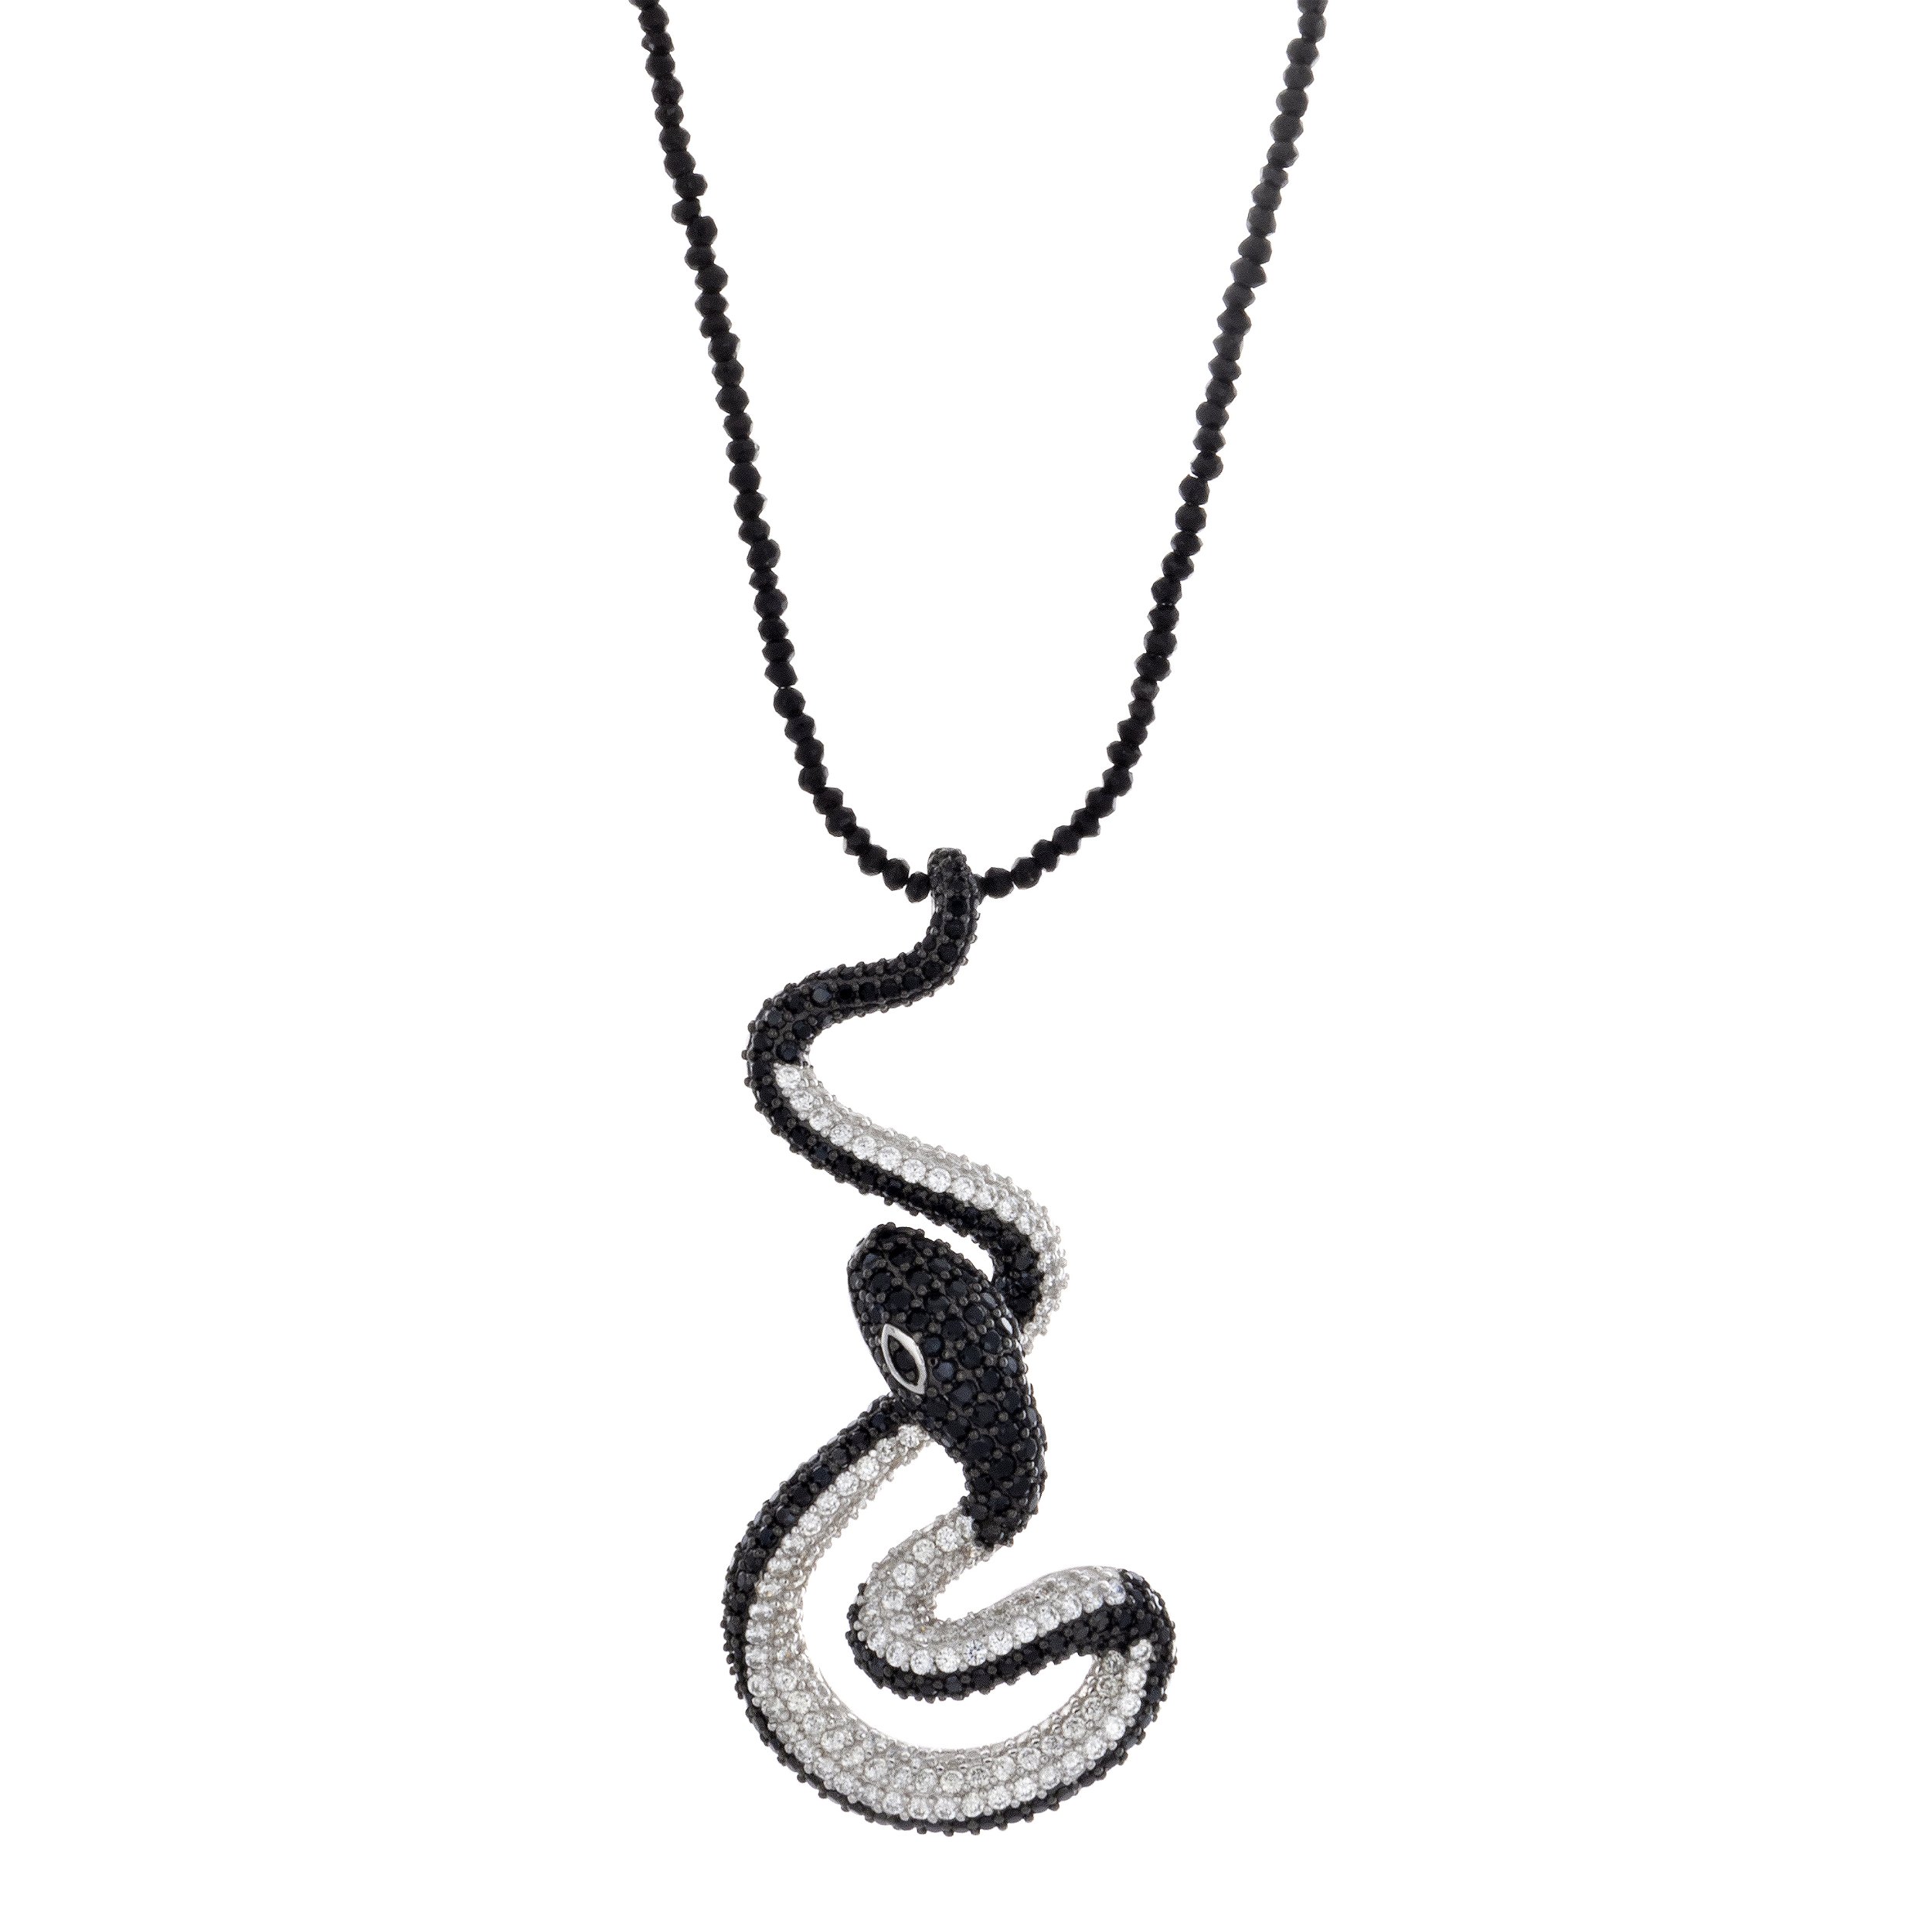 Swarovski Crystal Snake Necklace Set With Black & White Swarovski On Spinel Chain